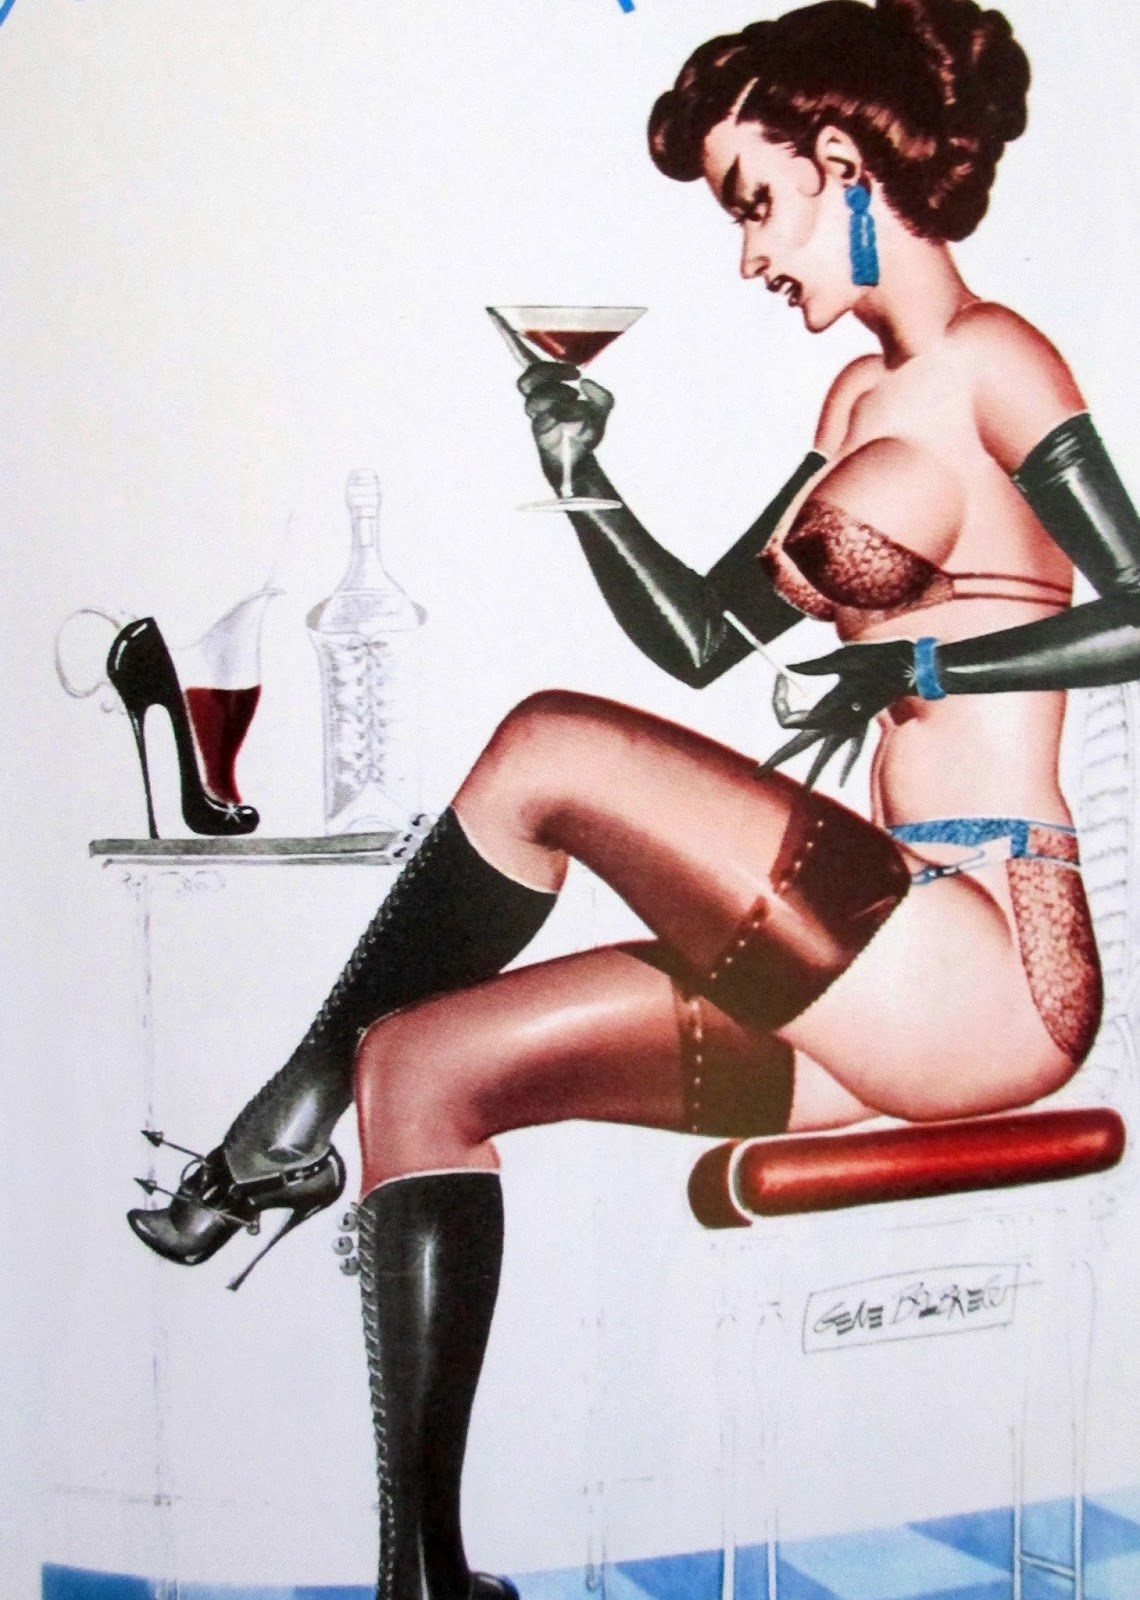 1950s Bondage Sex Cartoons - Nine of the most iconic retro BDSM illustrators | Dazed